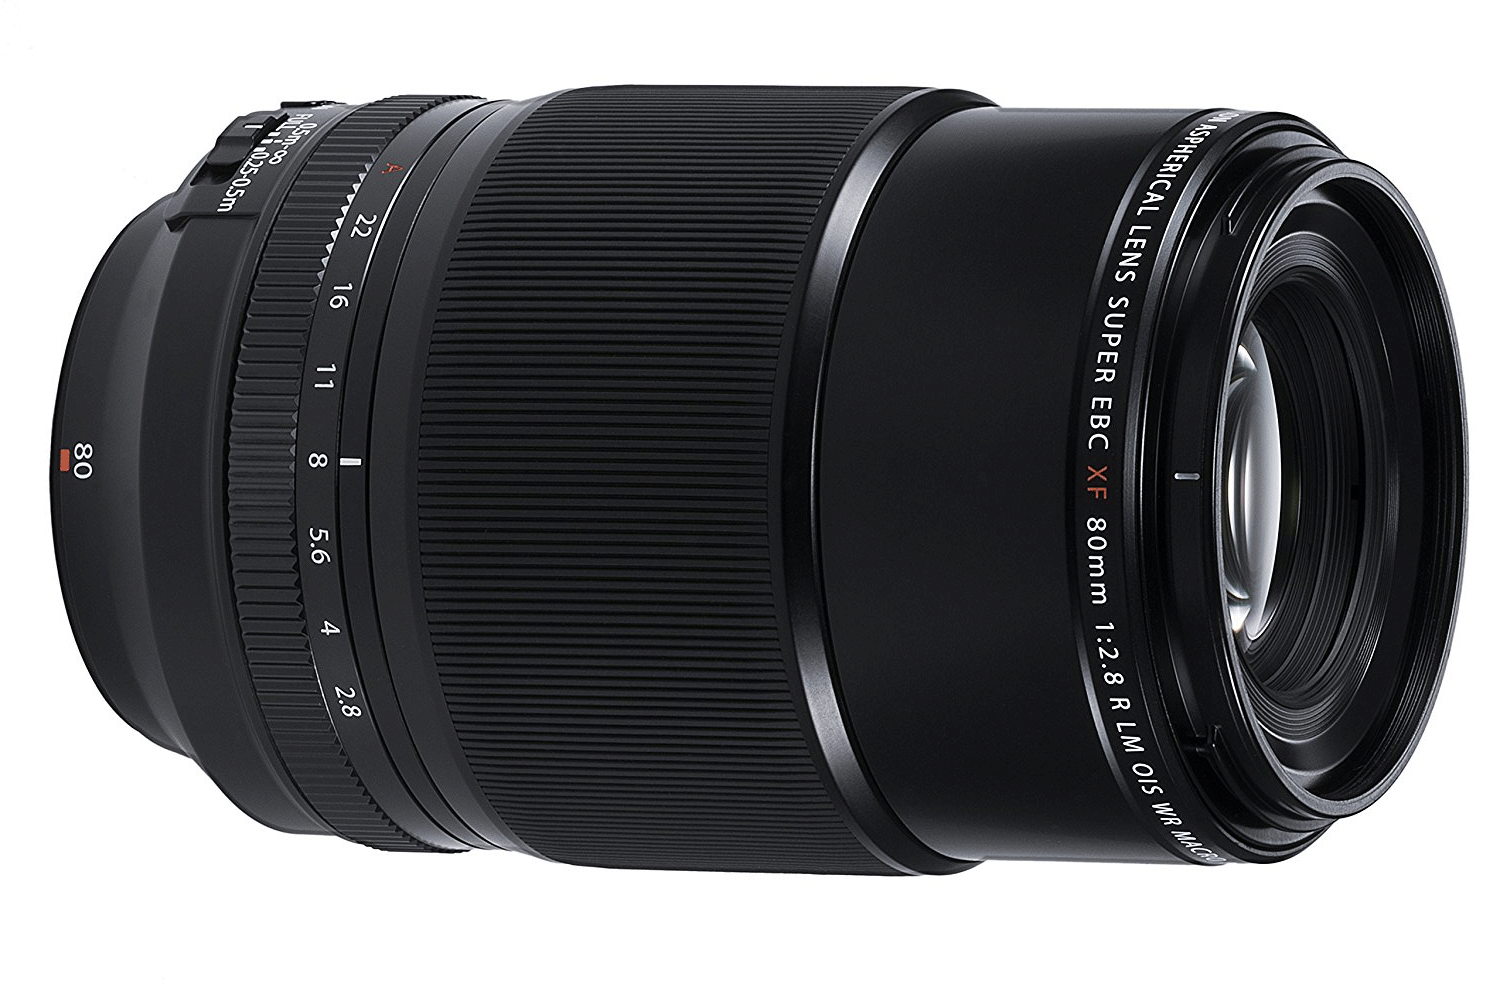 Fujifilm XF 80mm F2.8 R LM OIS WR Macro Lens Announced